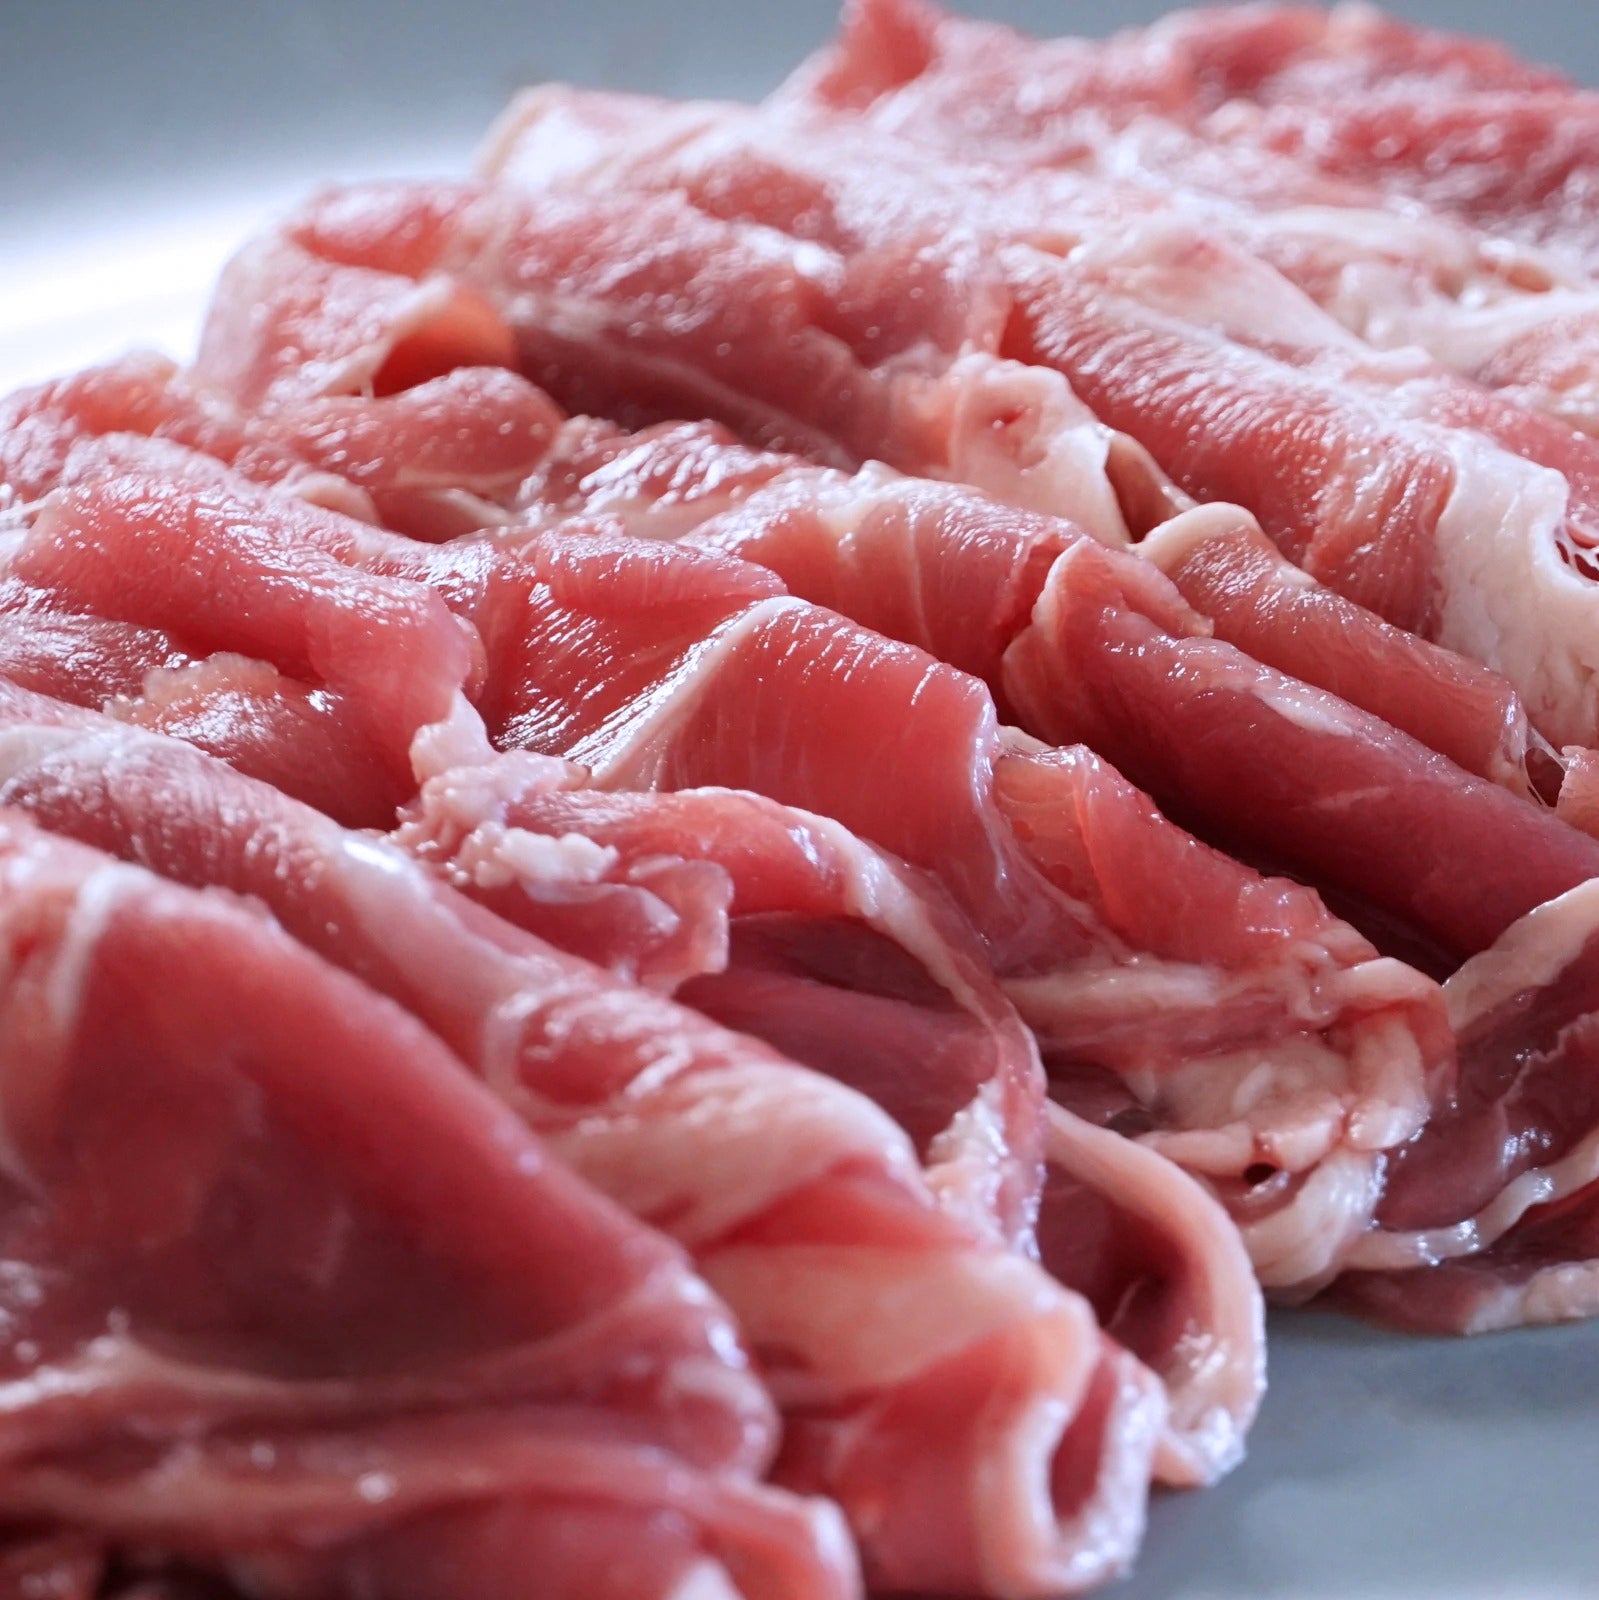 Free-Range Lamb Shoulder Slices from New Zealand (300g) - Horizon Farms